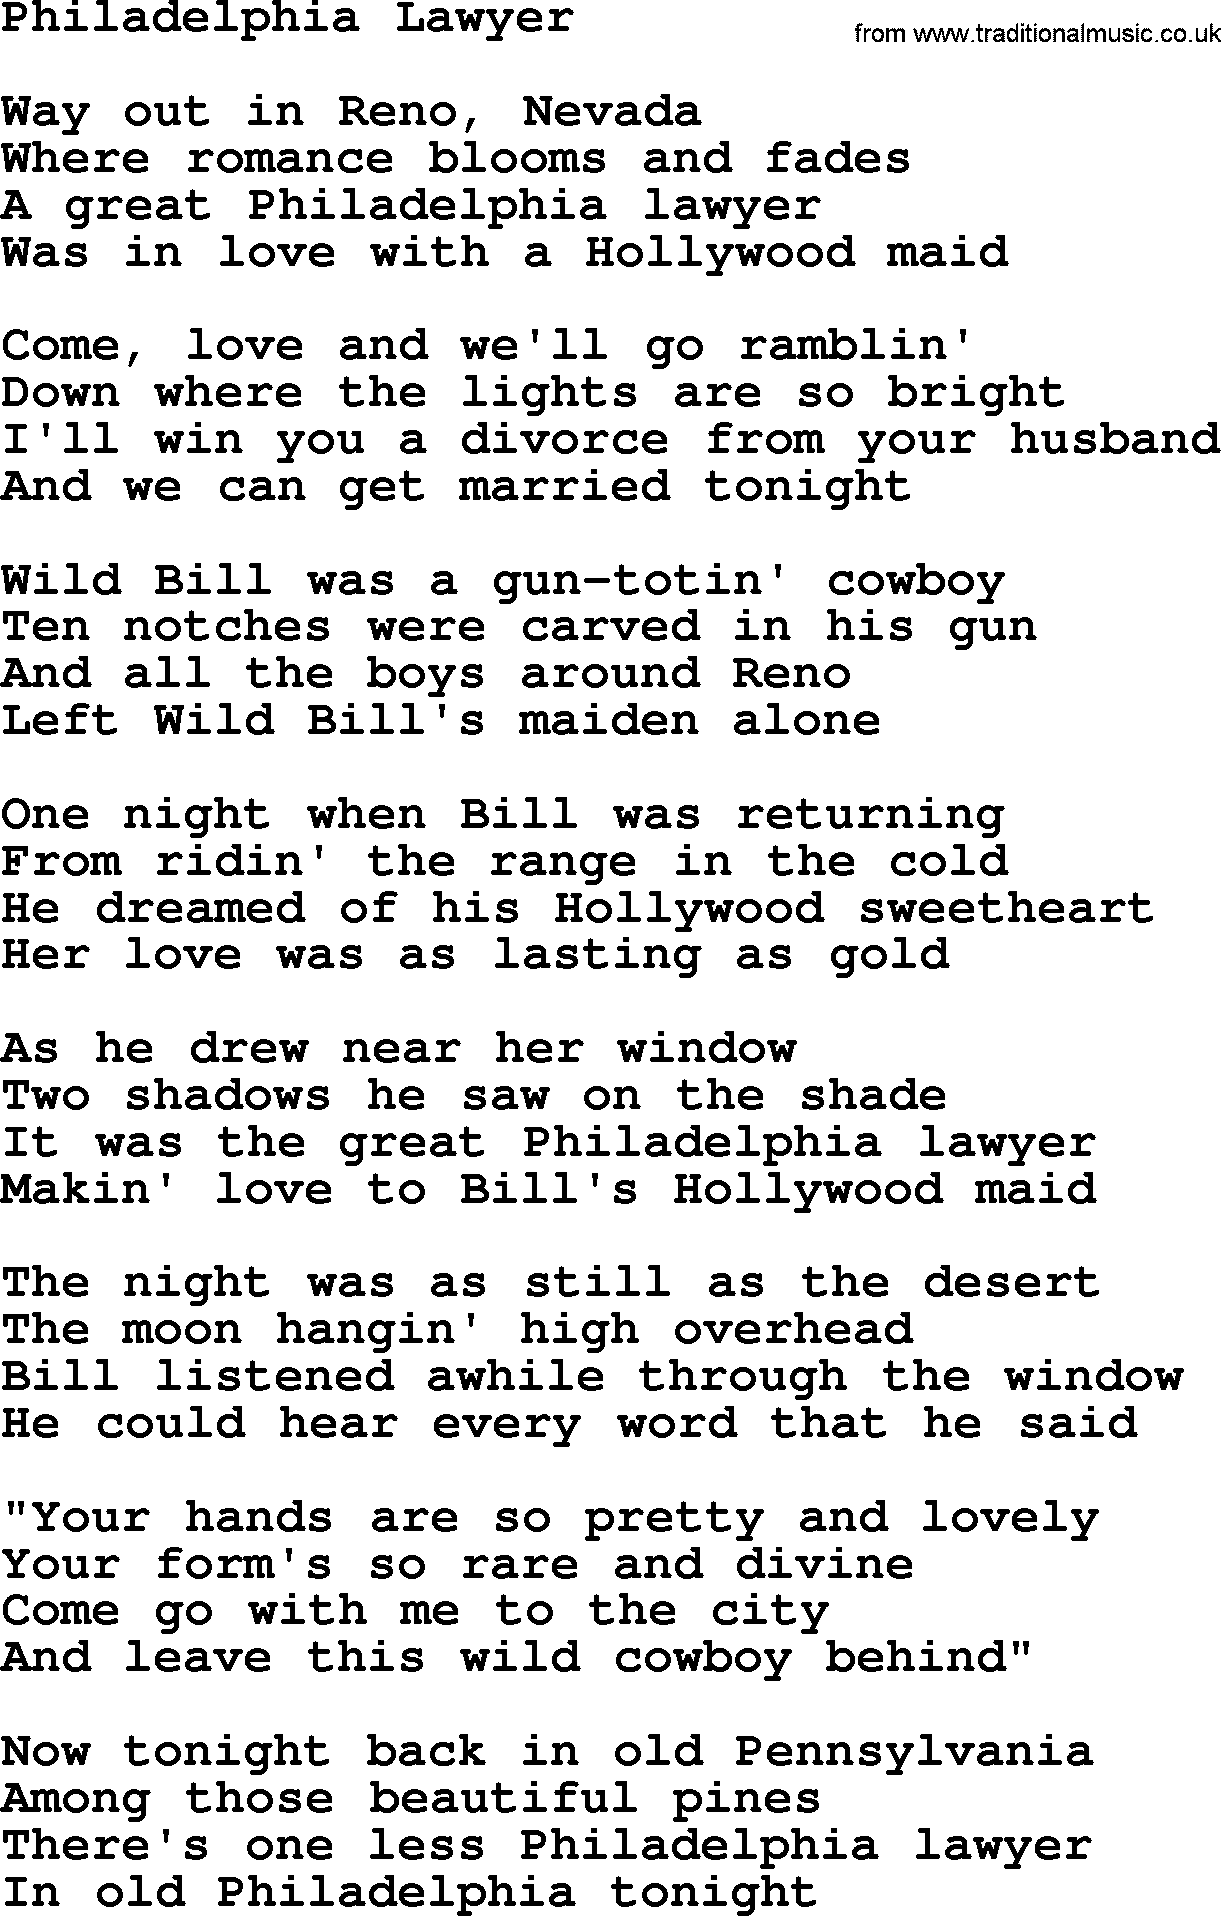 Woody Guthrie song Philadelphia Lawyer lyrics